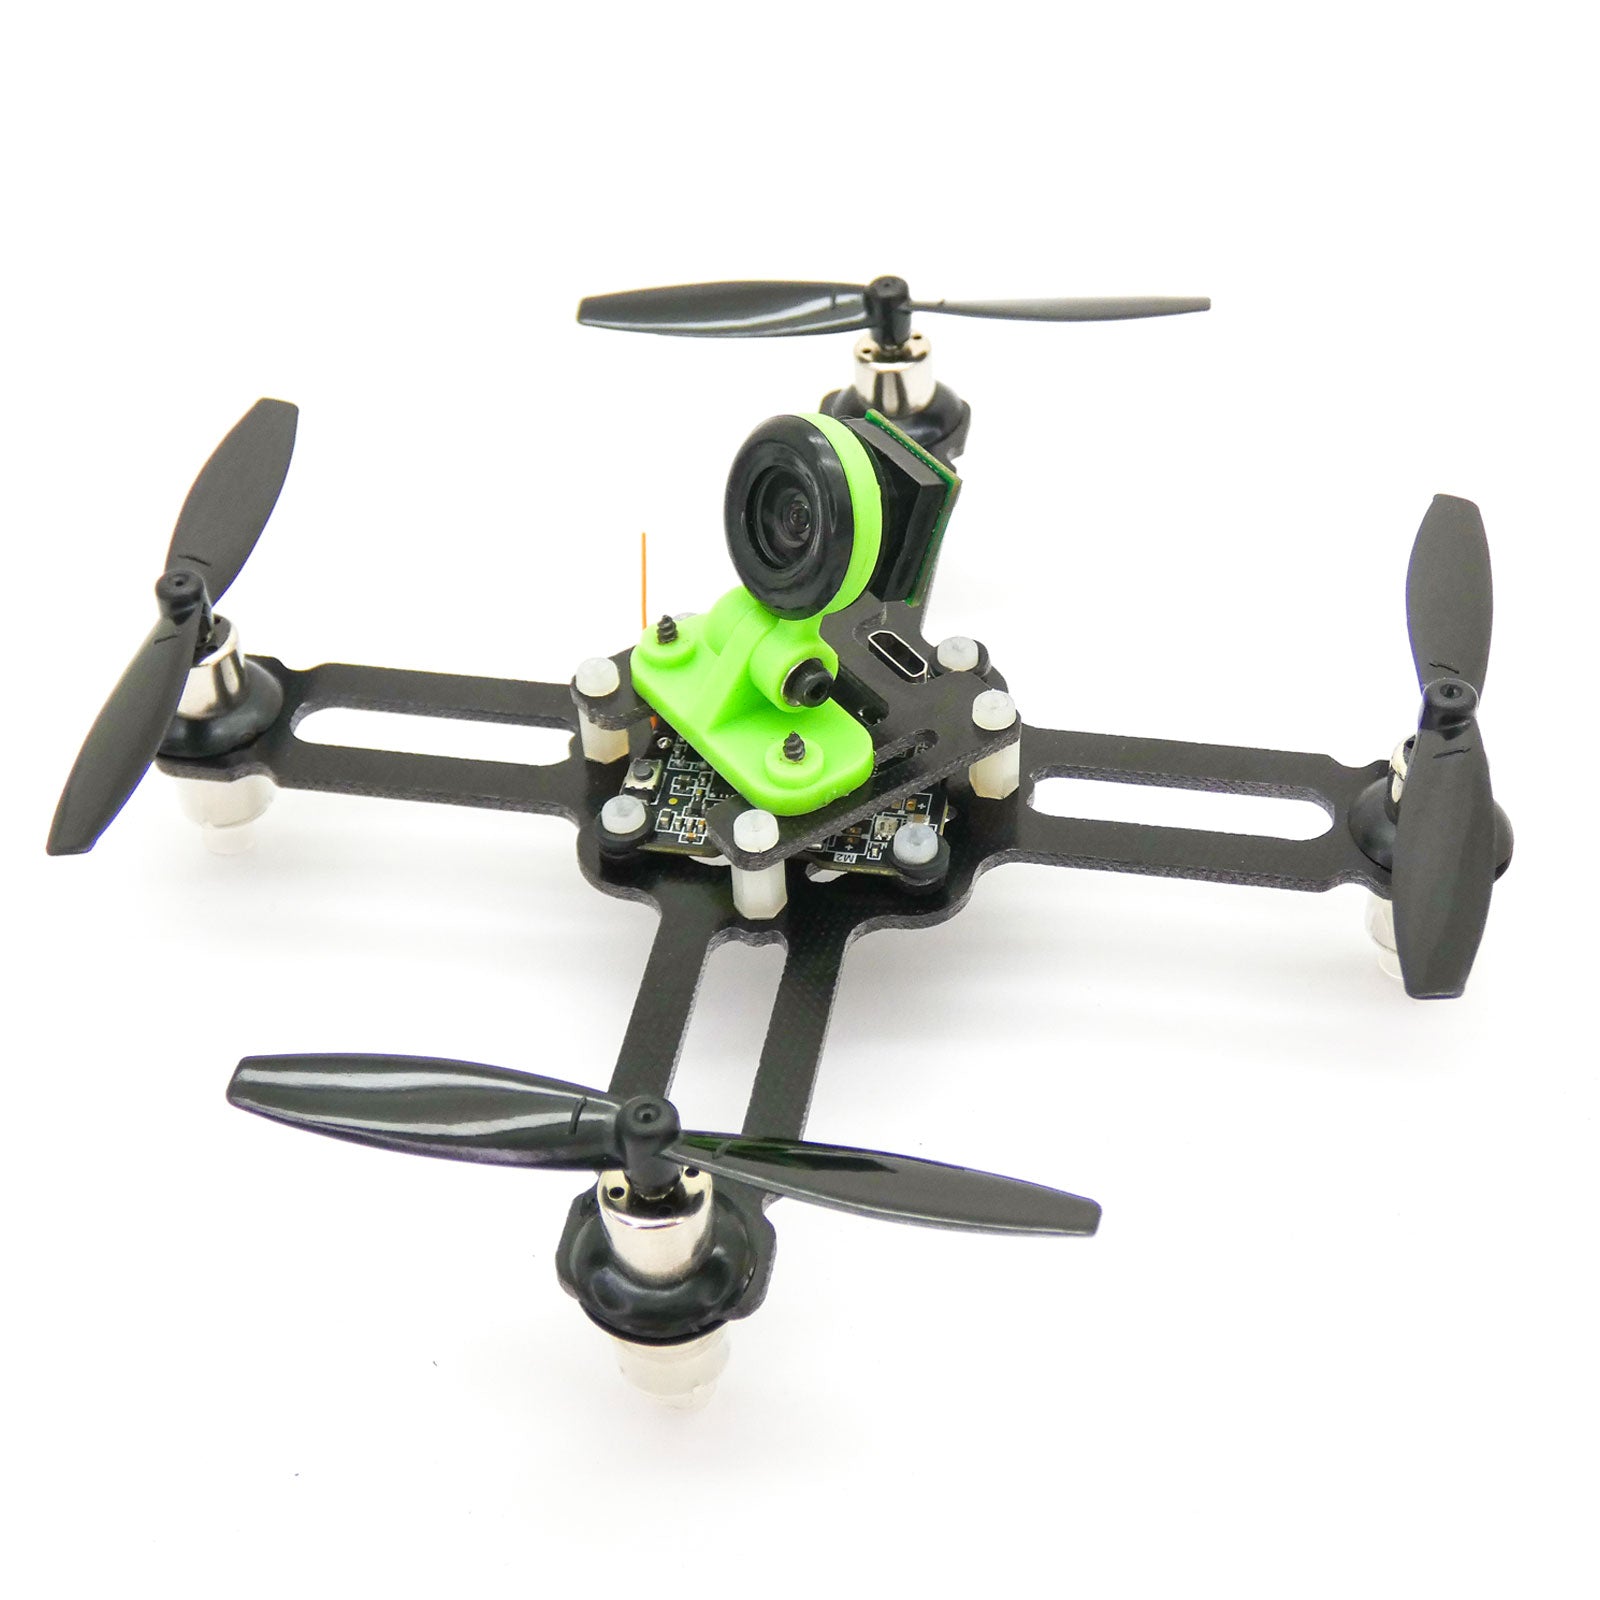 SpeedyFPV X110B 110mm Brushed FPV Drone Kit with Camera, AIO F4 F | SpeedyFPV